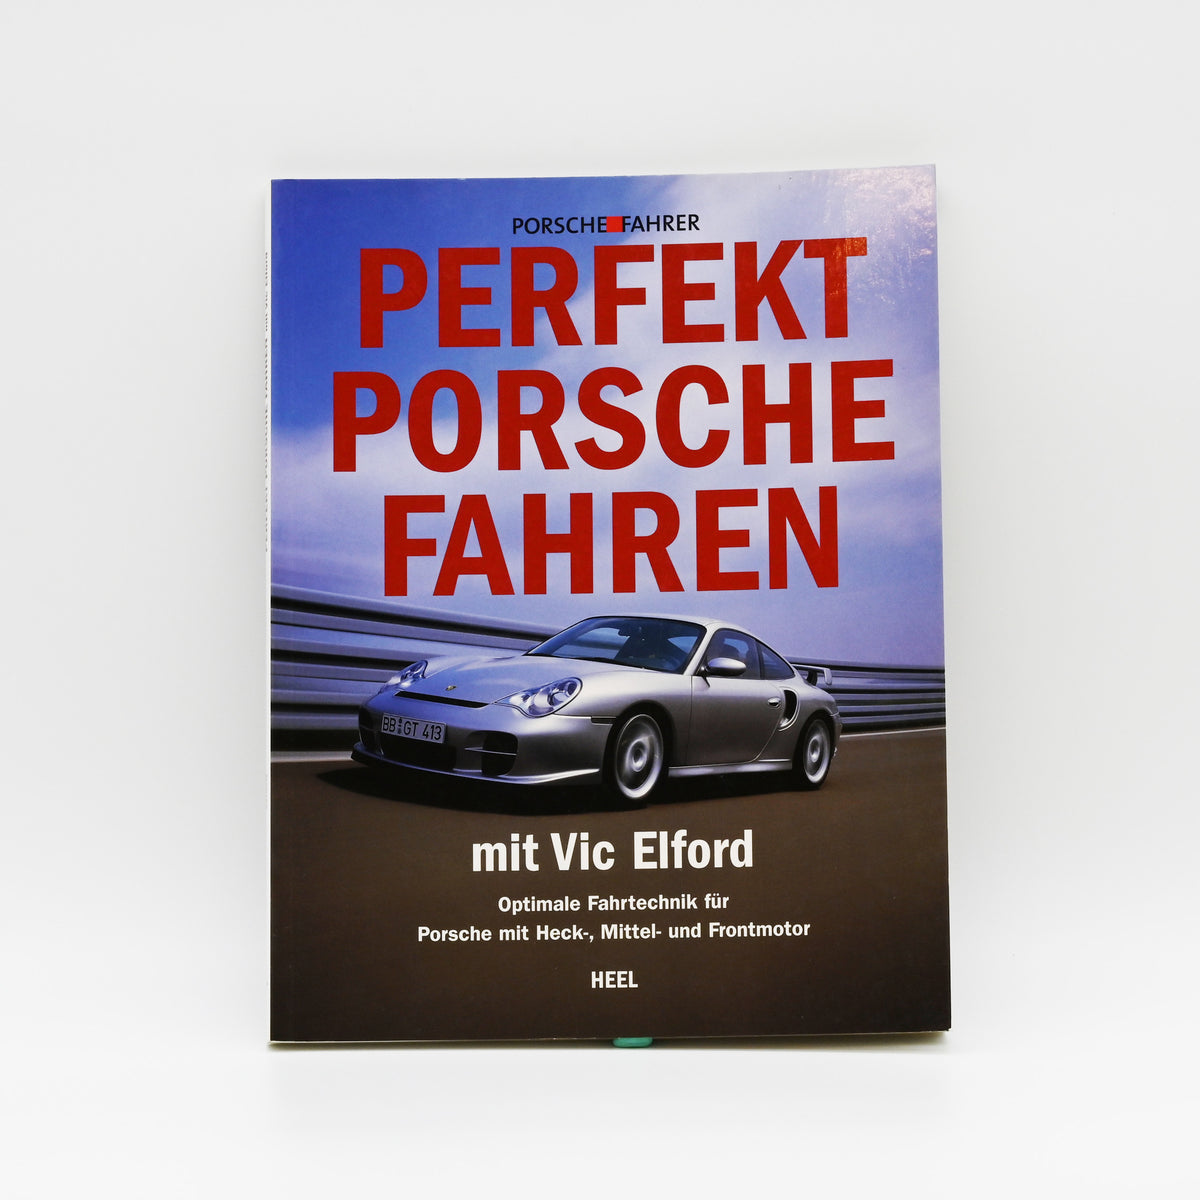 Porsche Books